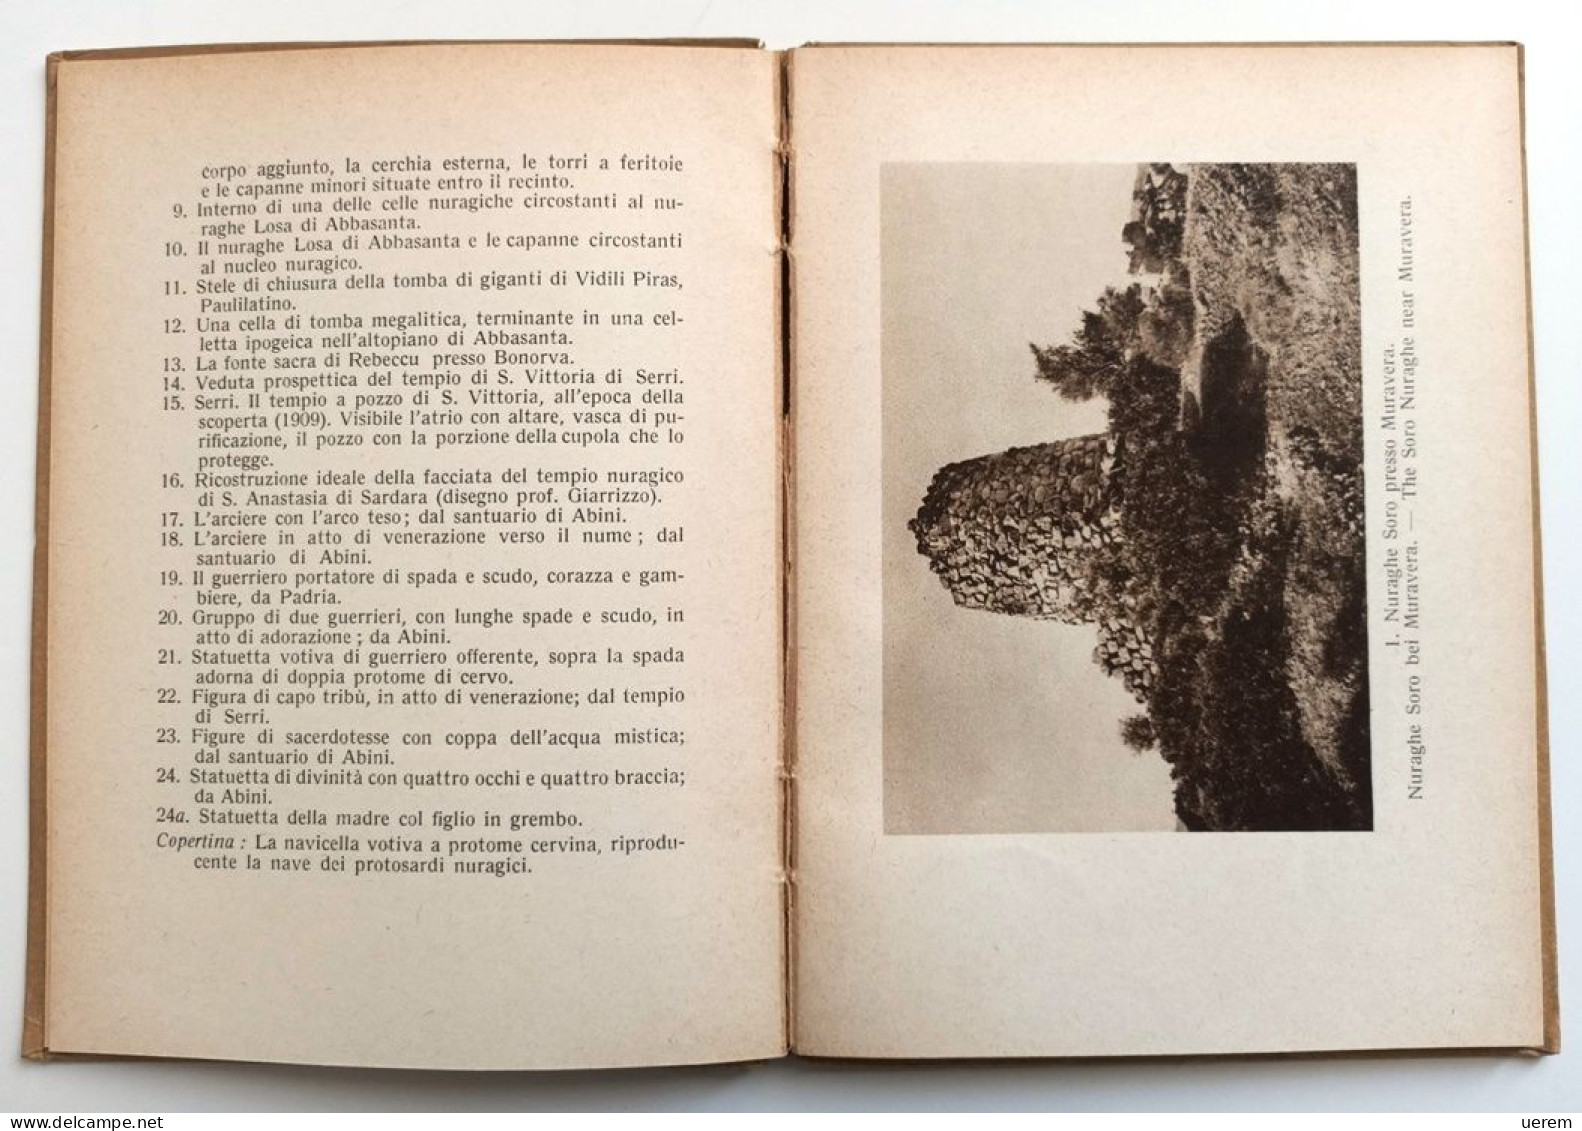 1930 Sardegna Archeologia Taramelli TARAMELLI ANTONIO I Nuraghi Ed I Loro Primi Abitatori - Old Books